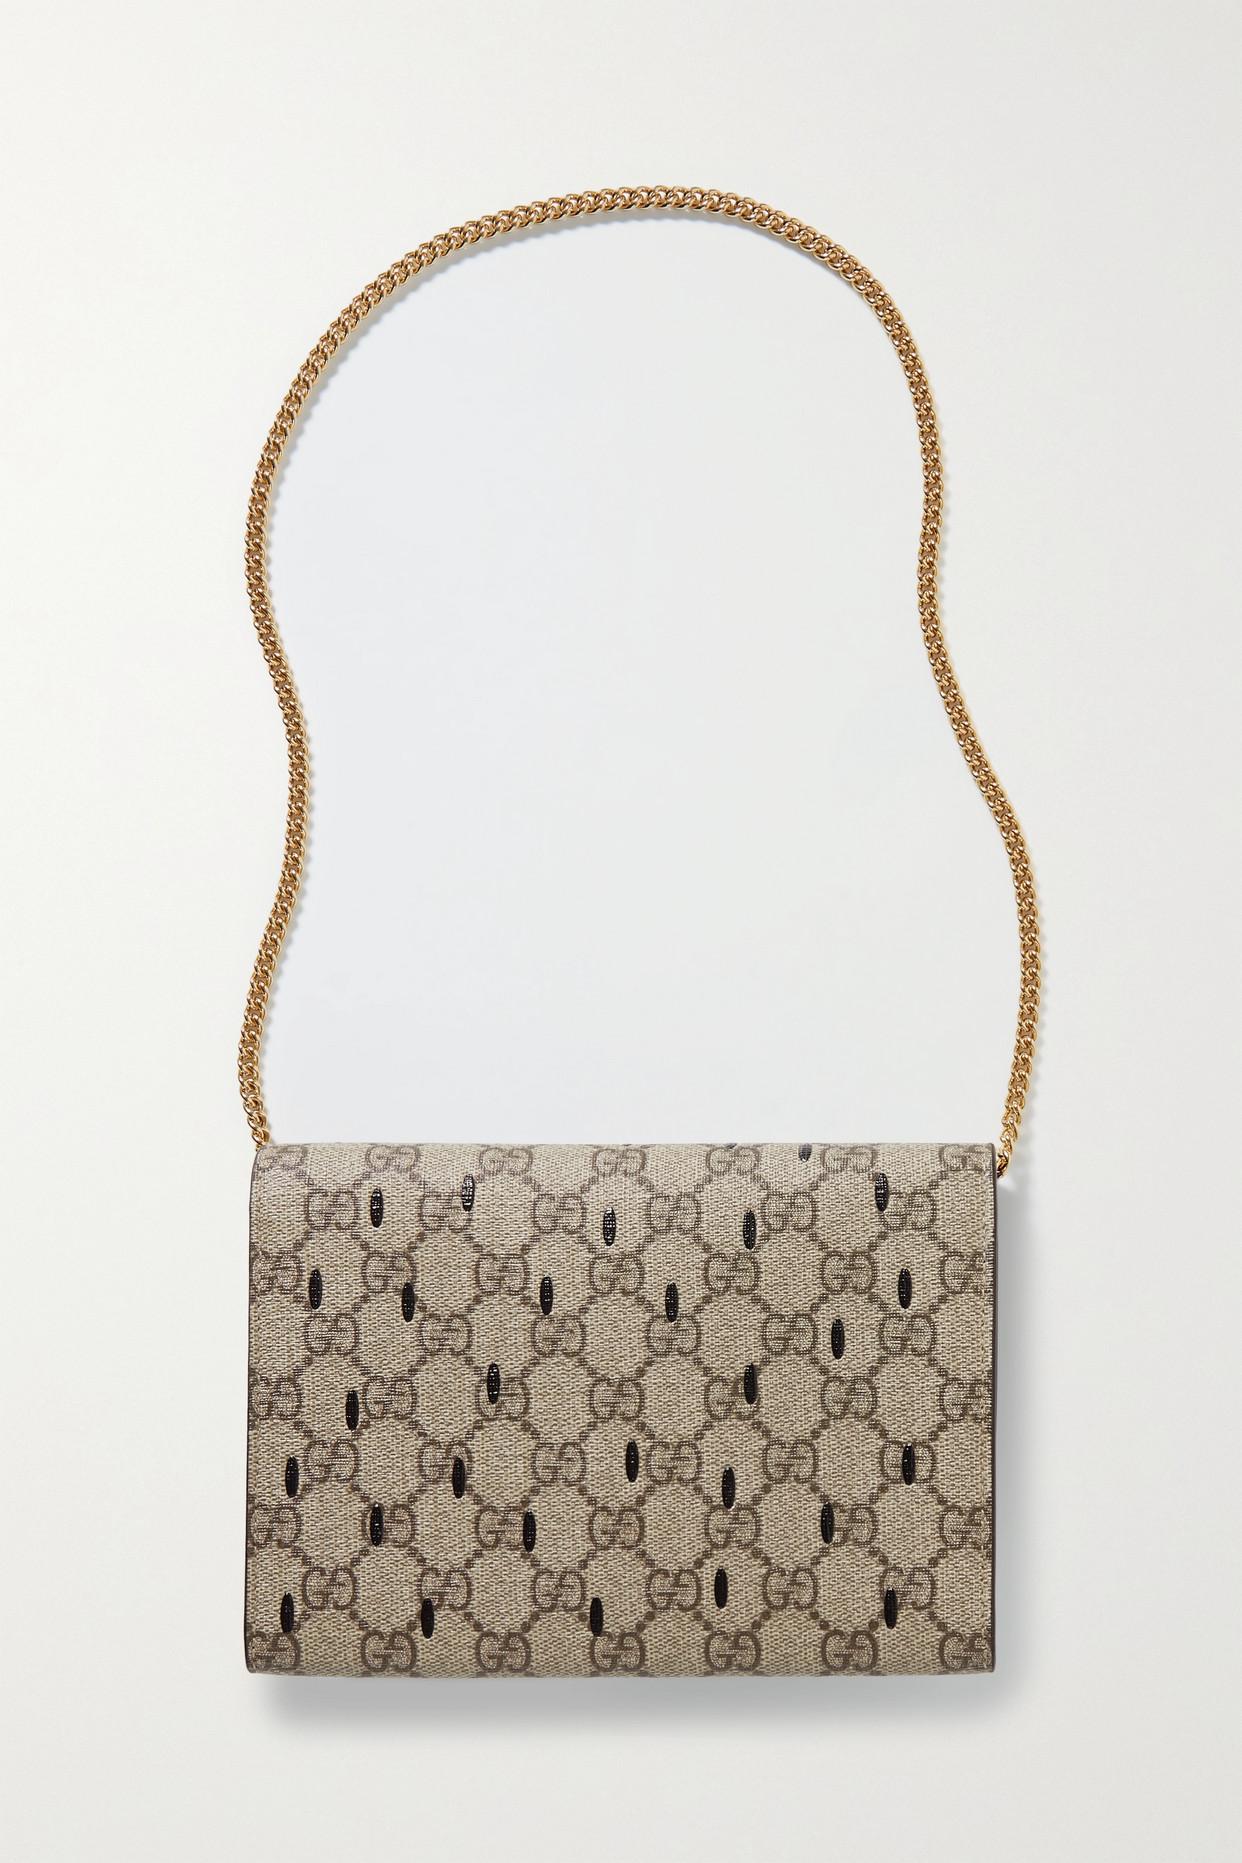 Gucci Dionysus Printed Coated-canvas Shoulder Bag